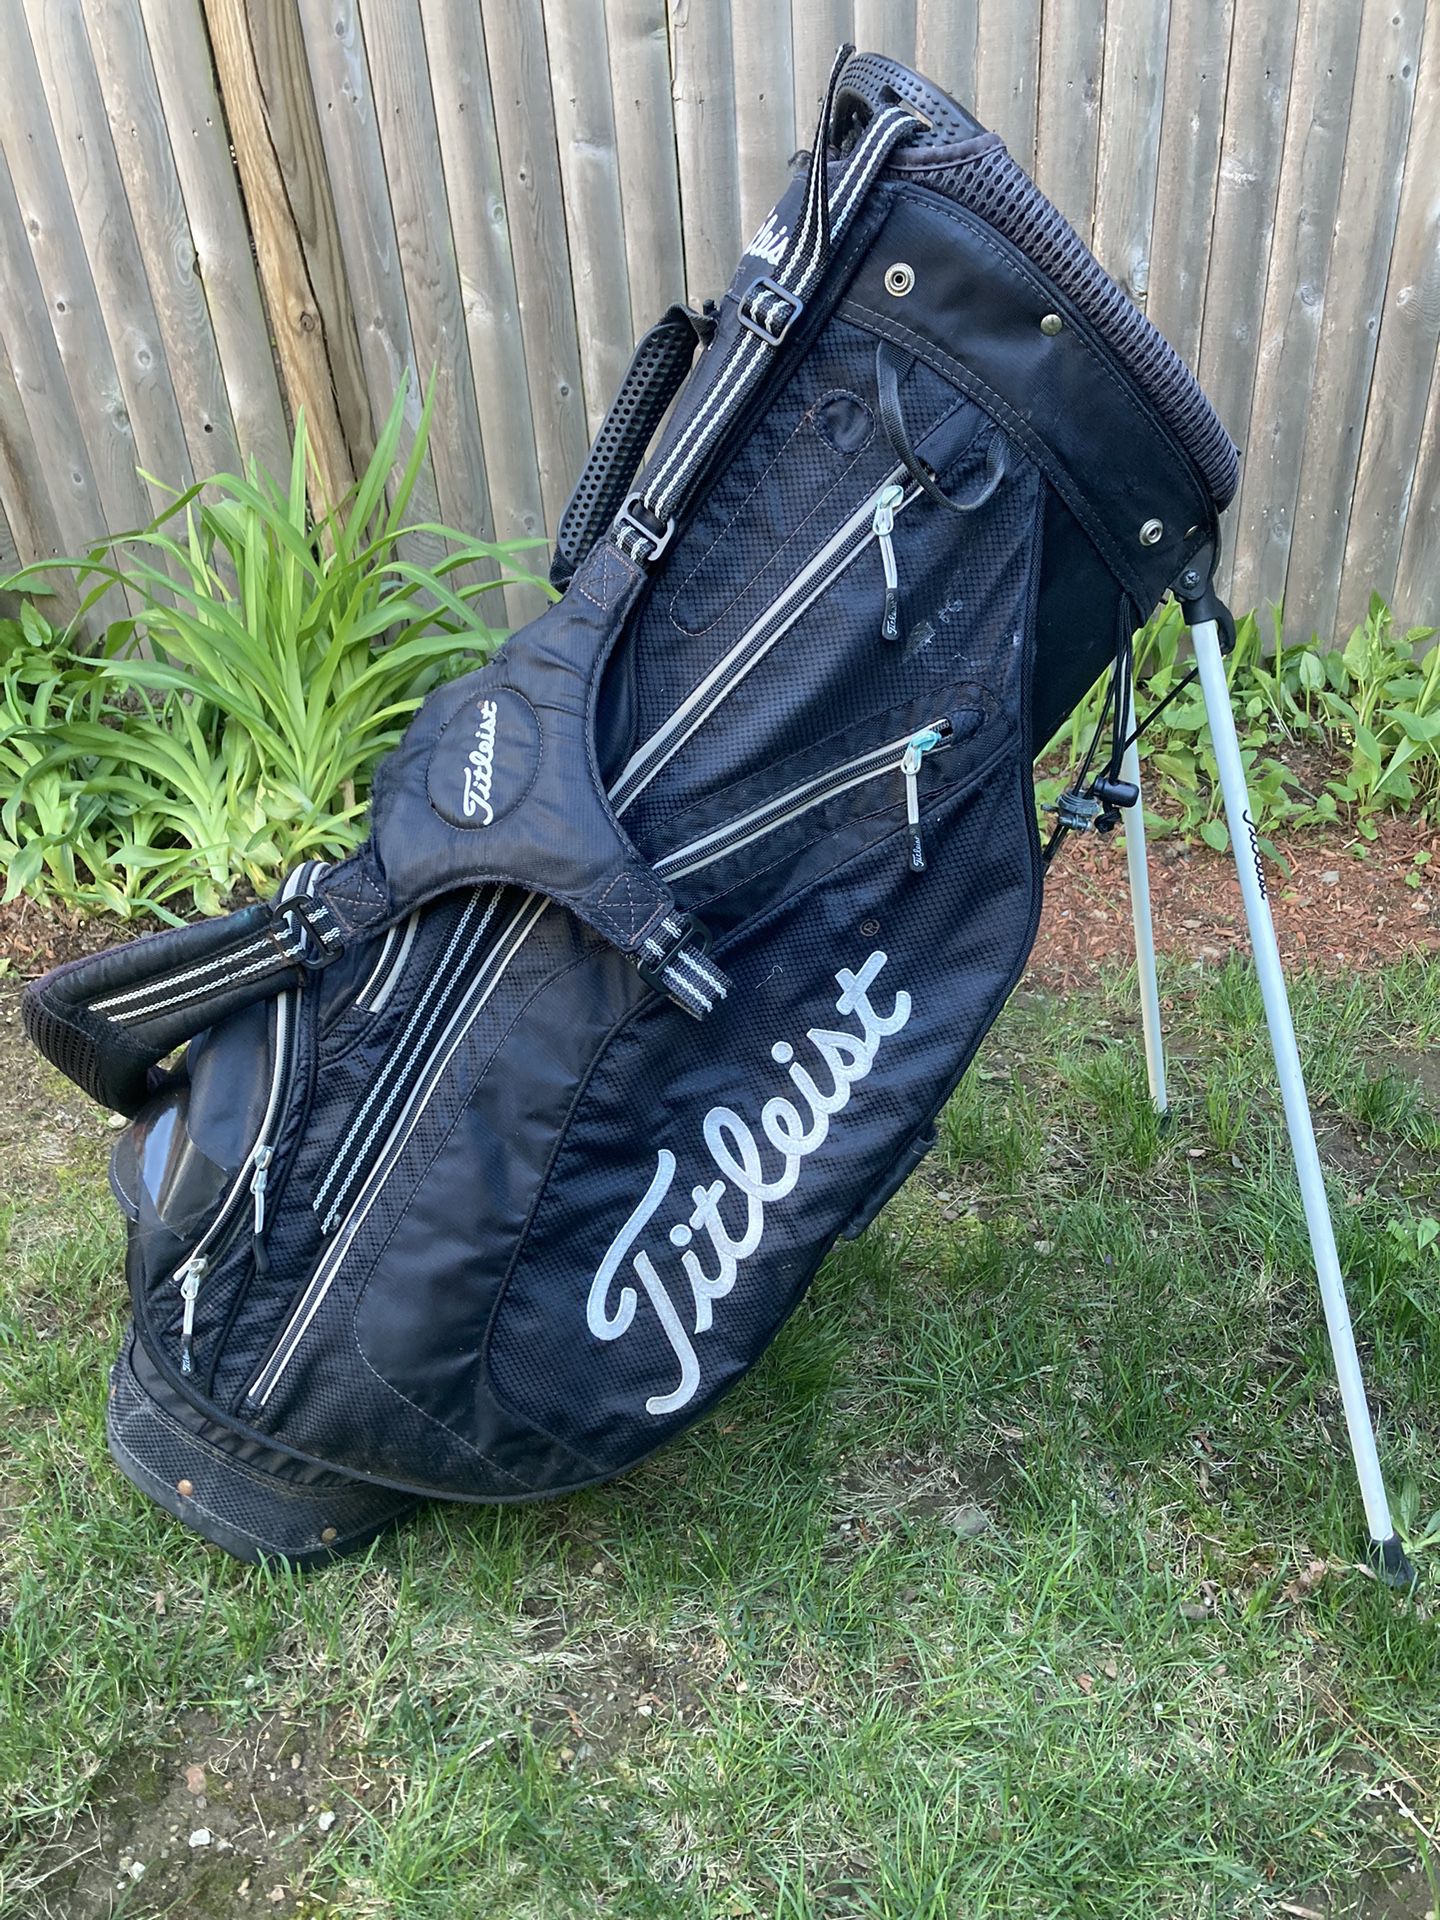 TITLIST Golf Bag